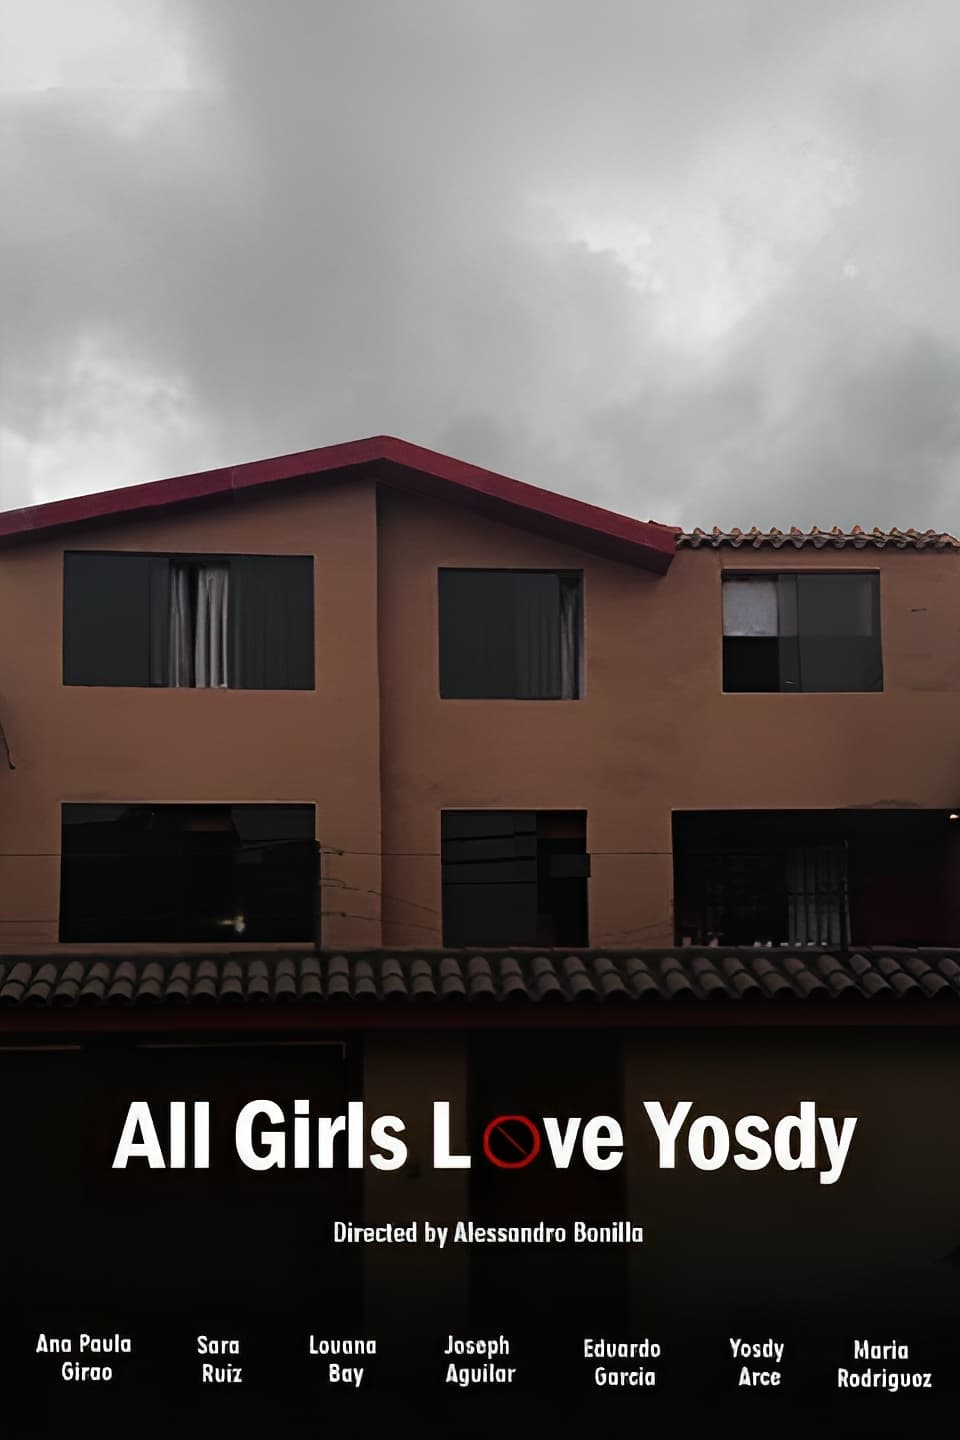 All Girls Love Yosdy